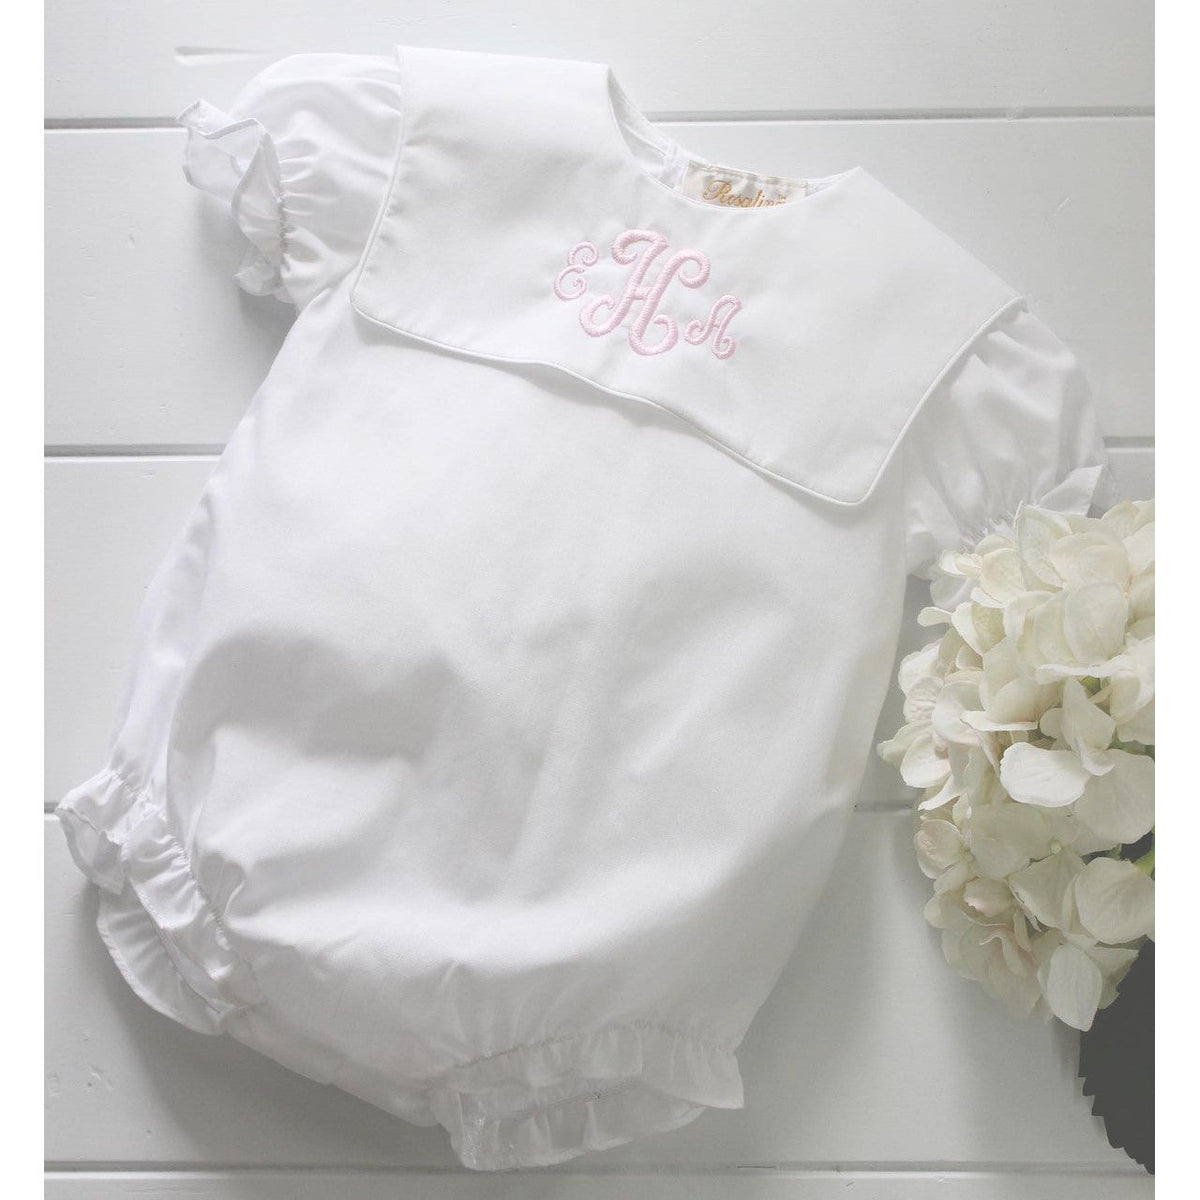 Baby Girls White Bubble Romper Outfit Bib Collar | Rosalina